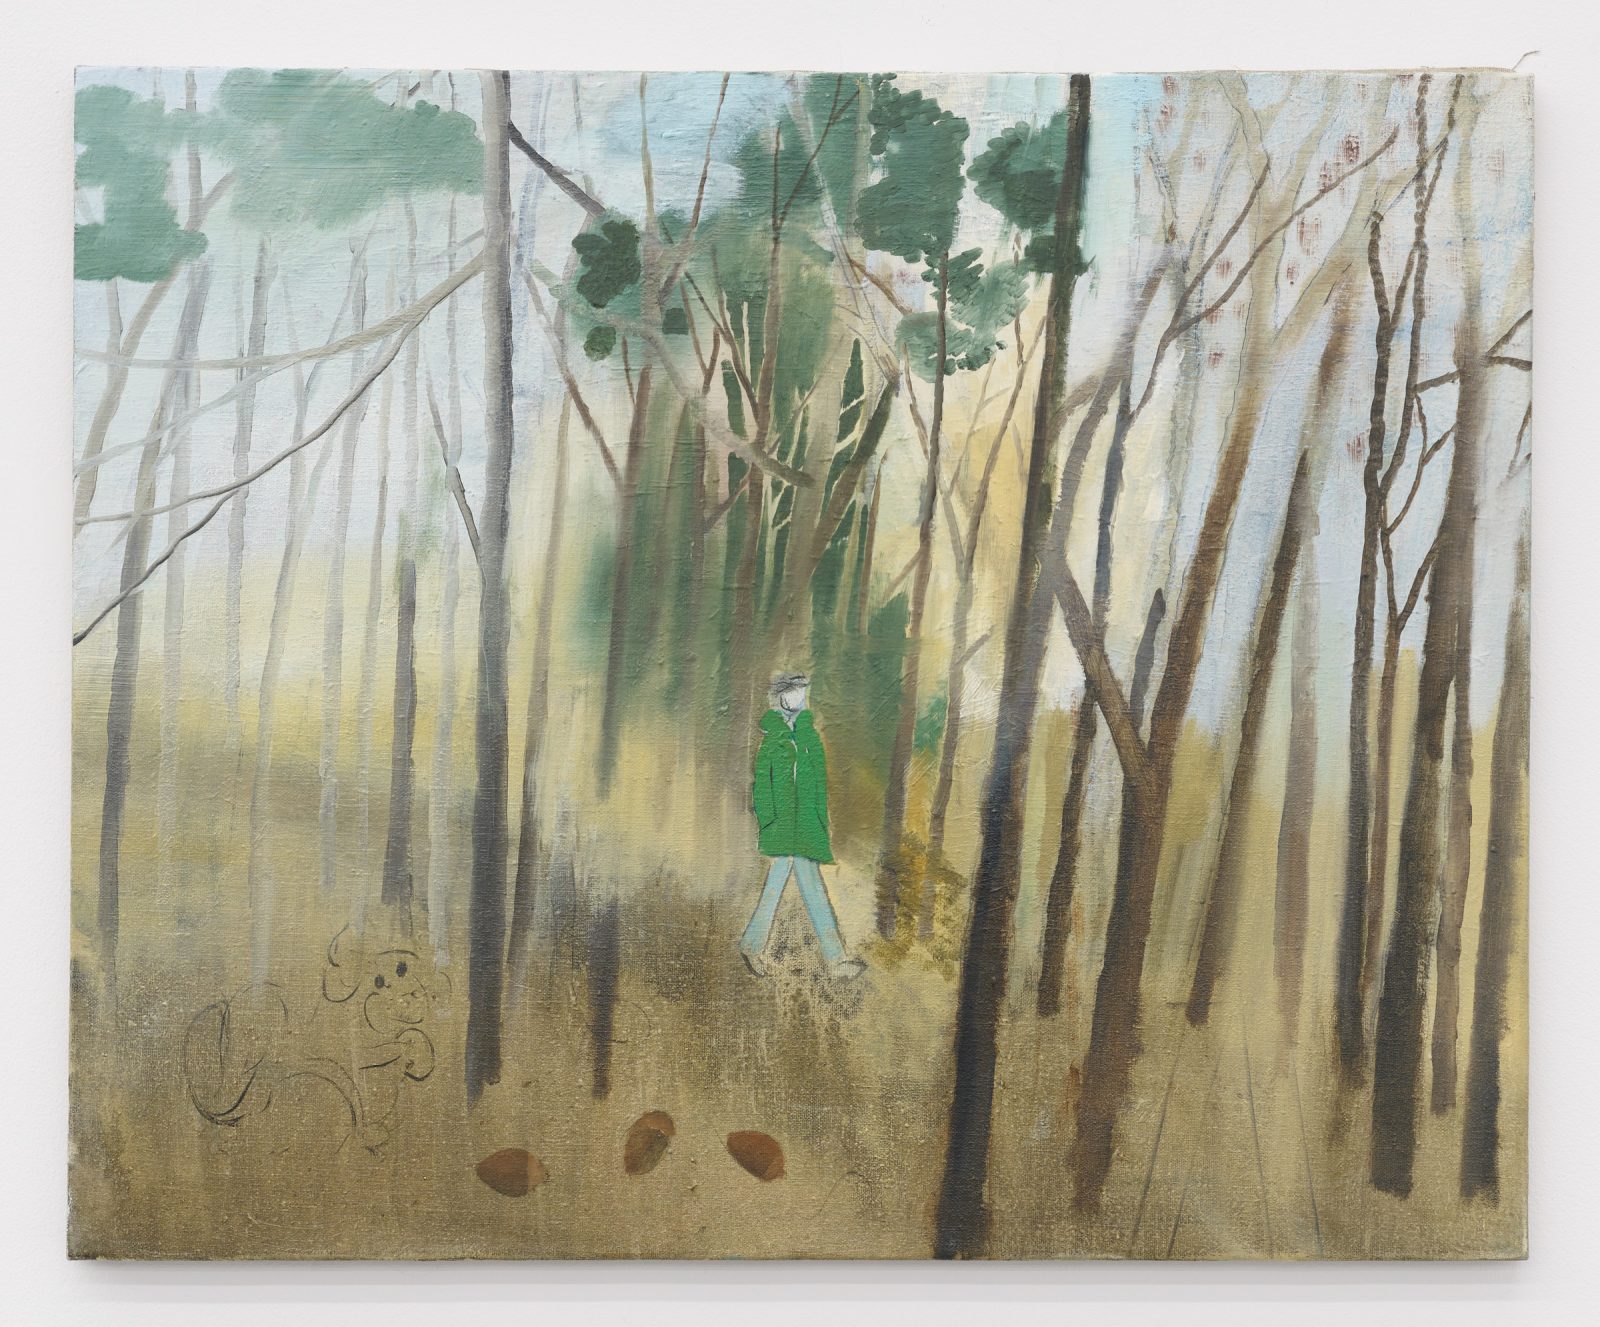 Yu Nishimura
Pory roku
2021
oil on canvas
53 × 65 cm